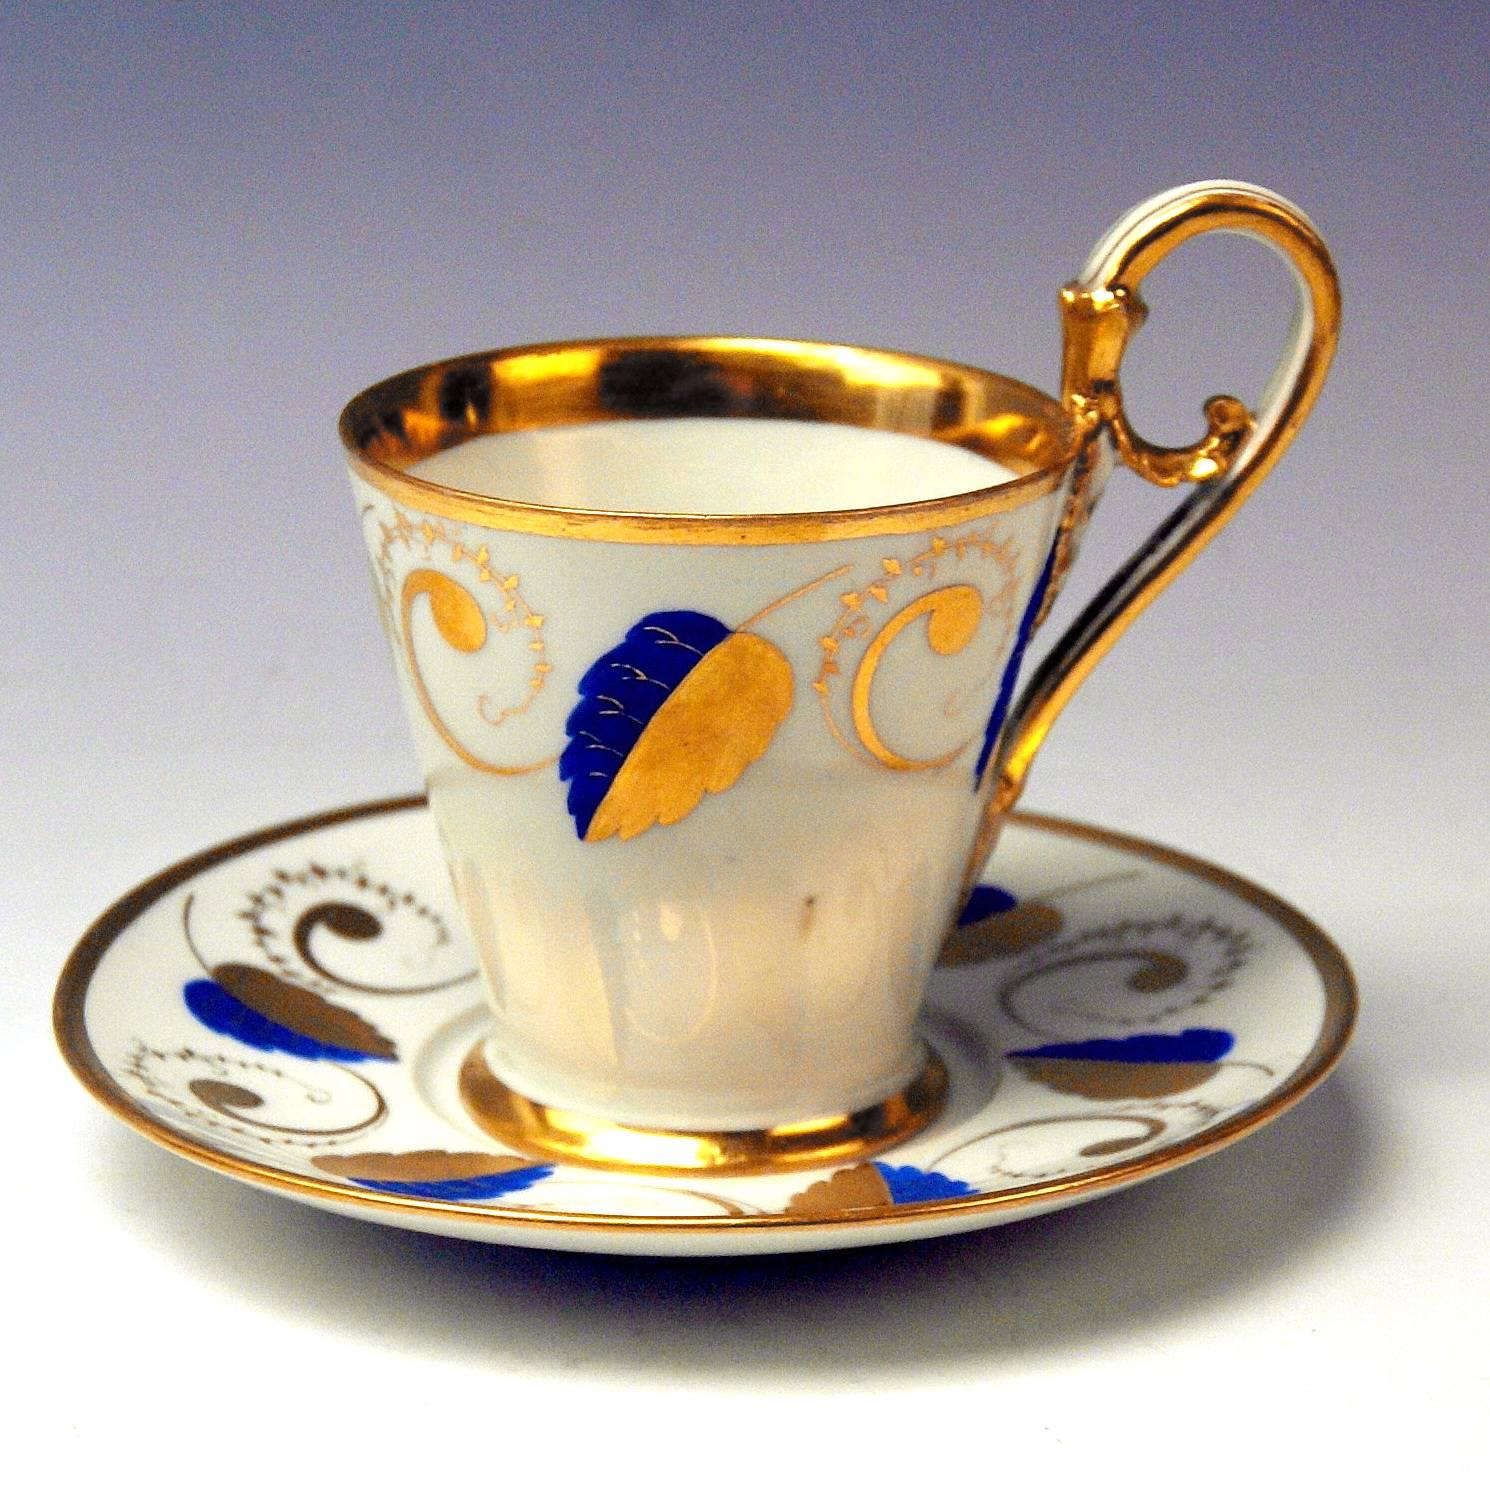 Biedermeier Vienna Imperial Porcelain Cup Saucer Golden Blue Ornaments with Leaves 1812